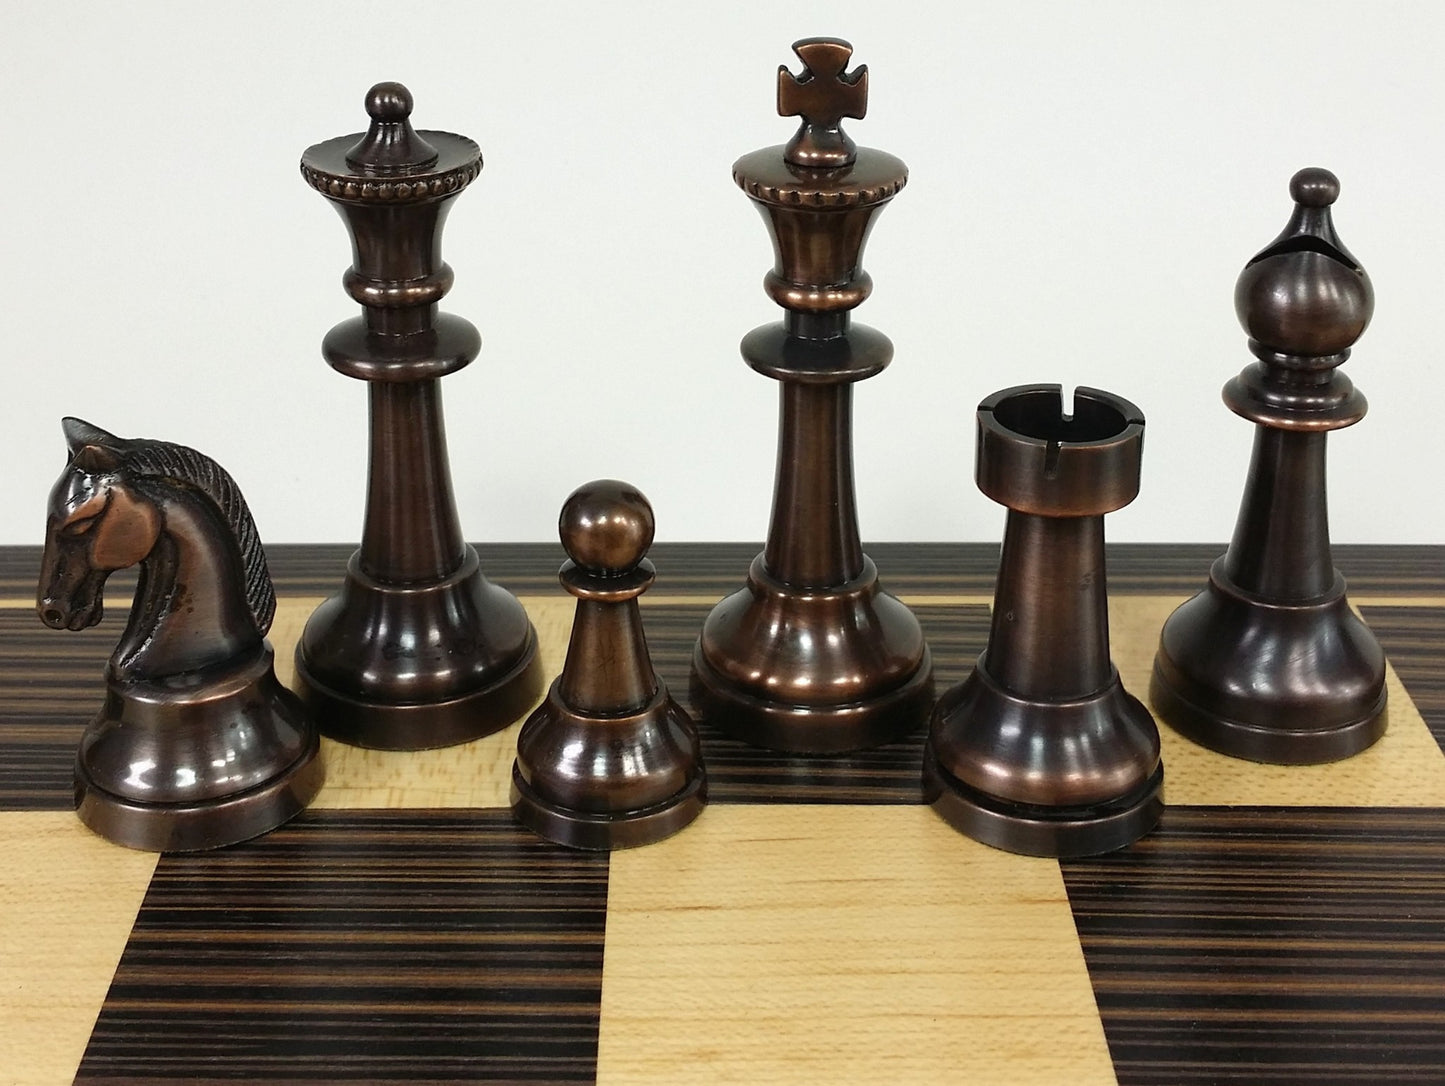 Brass Metal Antique Bronze & Silver Classic Staunton Chess Set W 17" Ebony Board